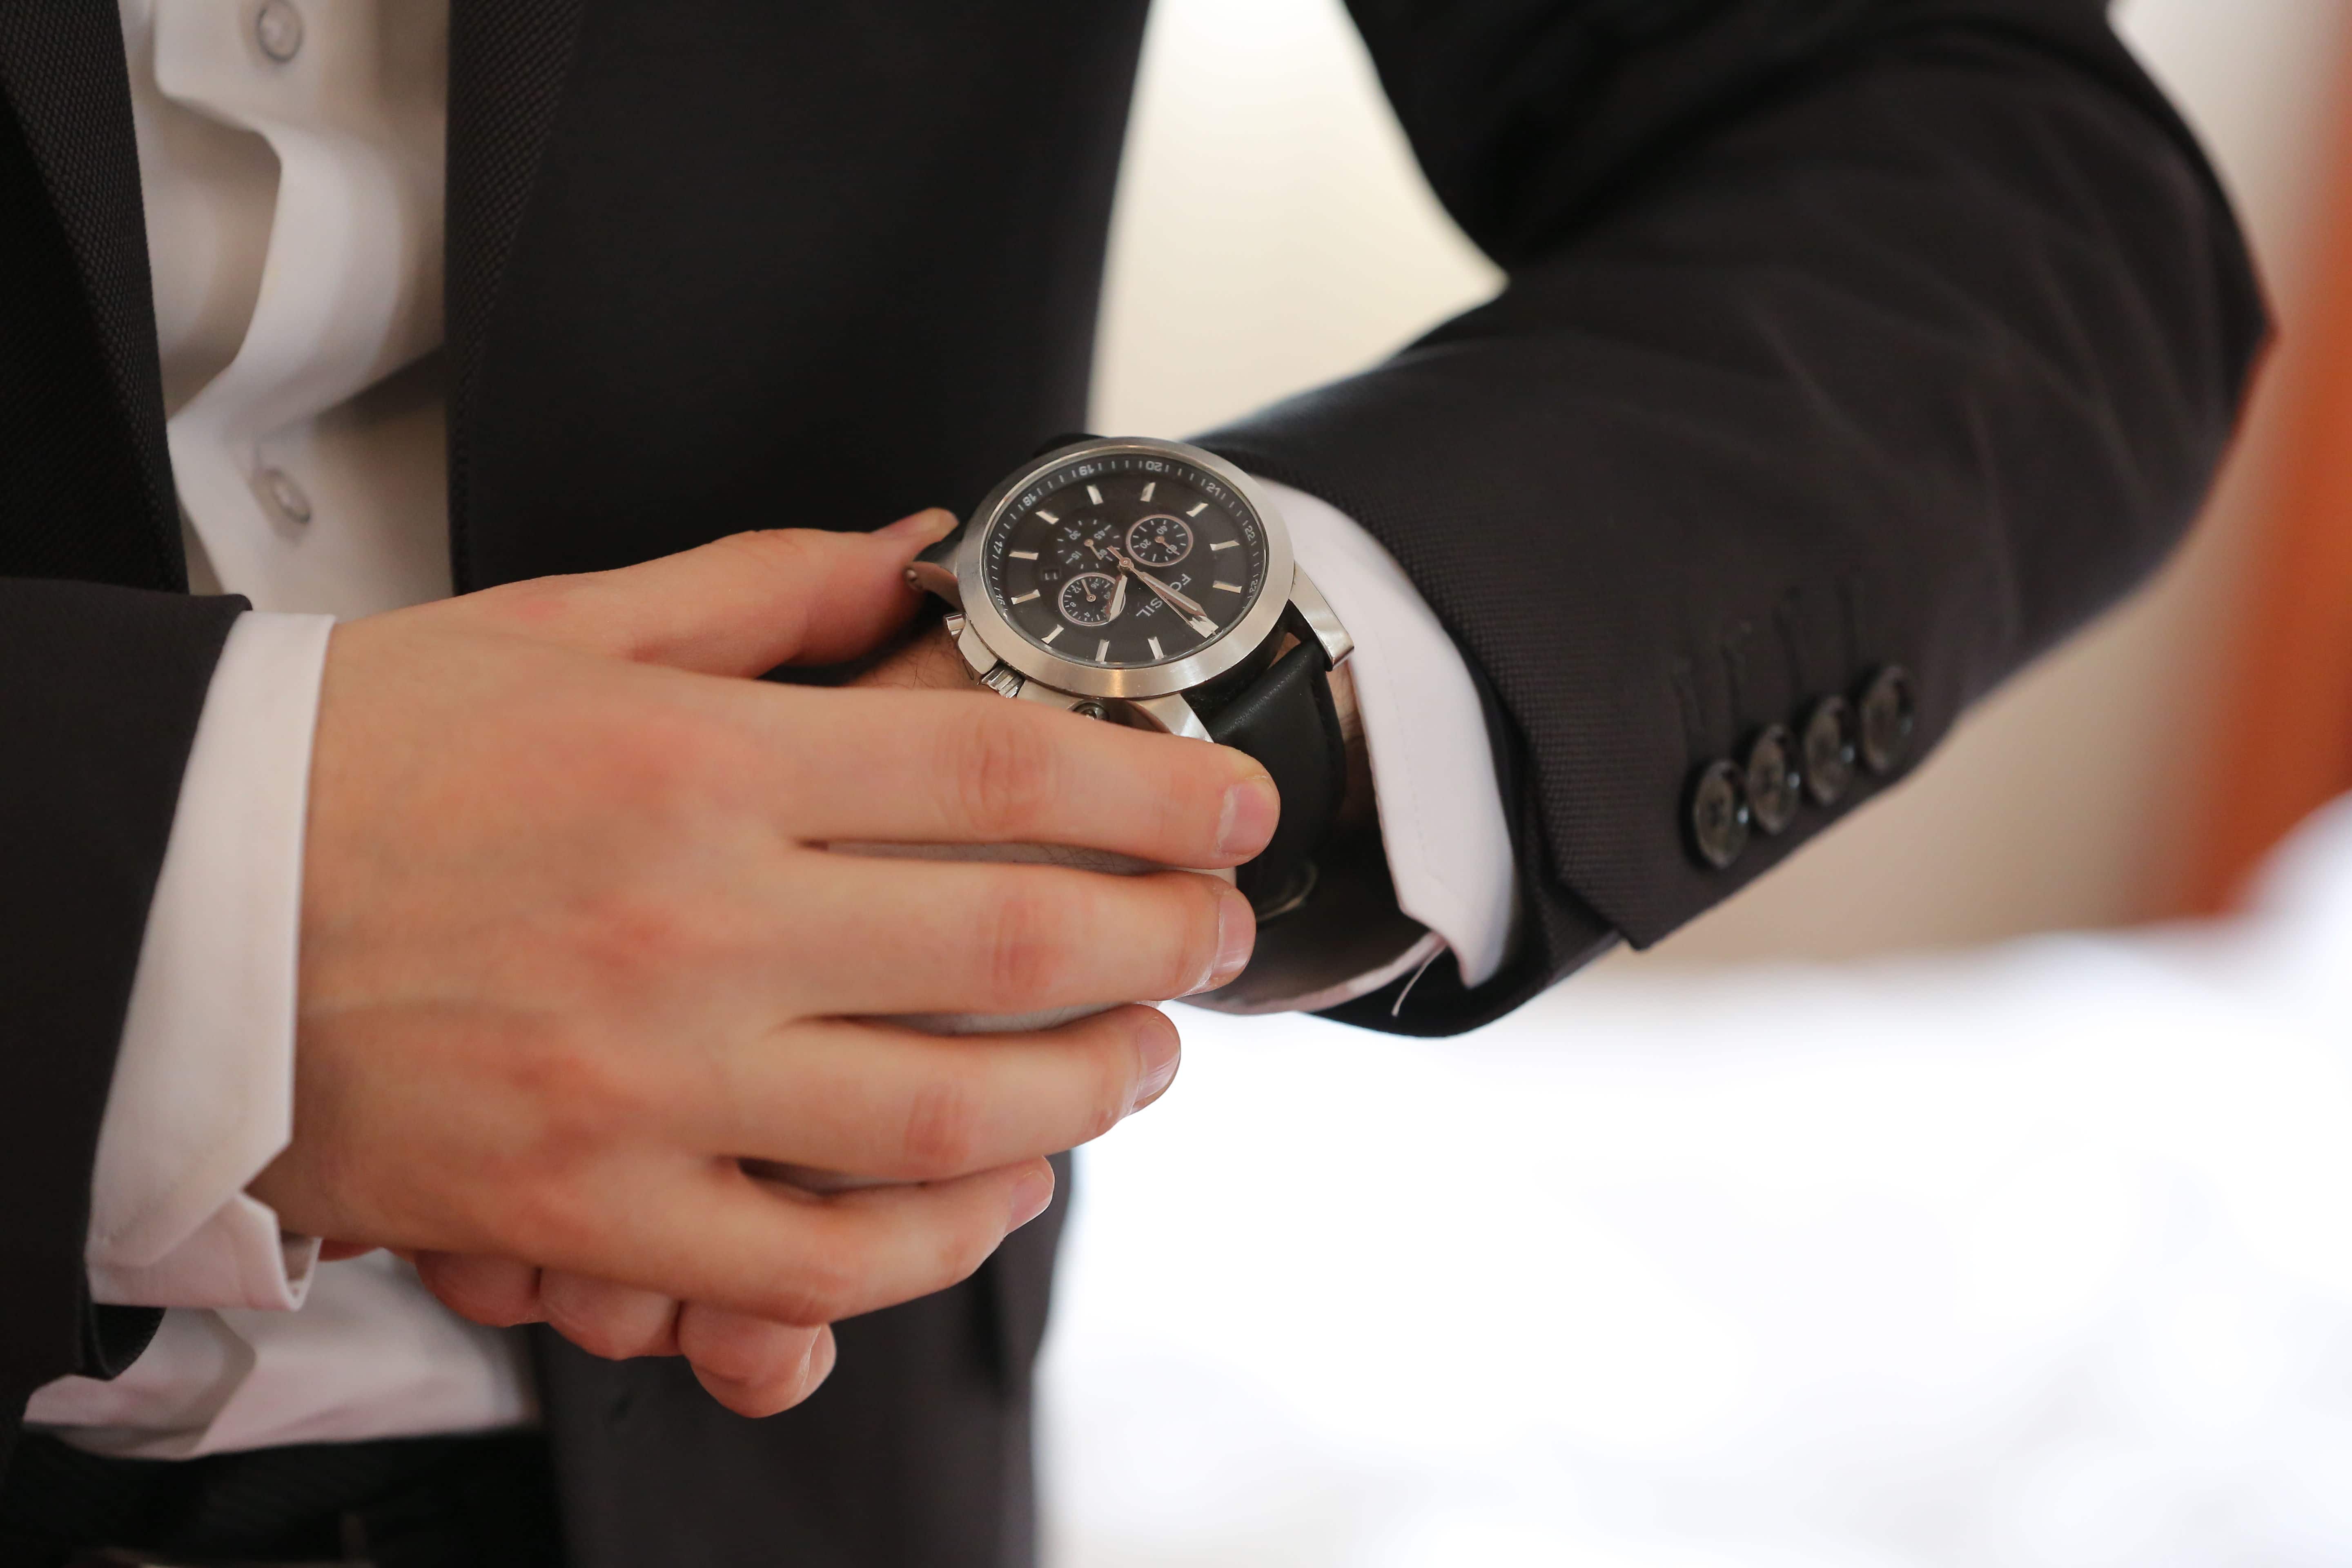 Можно дарить мужчине часы наручные. Наручные часы на руке. Часы ручные на руке. Мужчина с часами на руке. Мужская рука с часами.